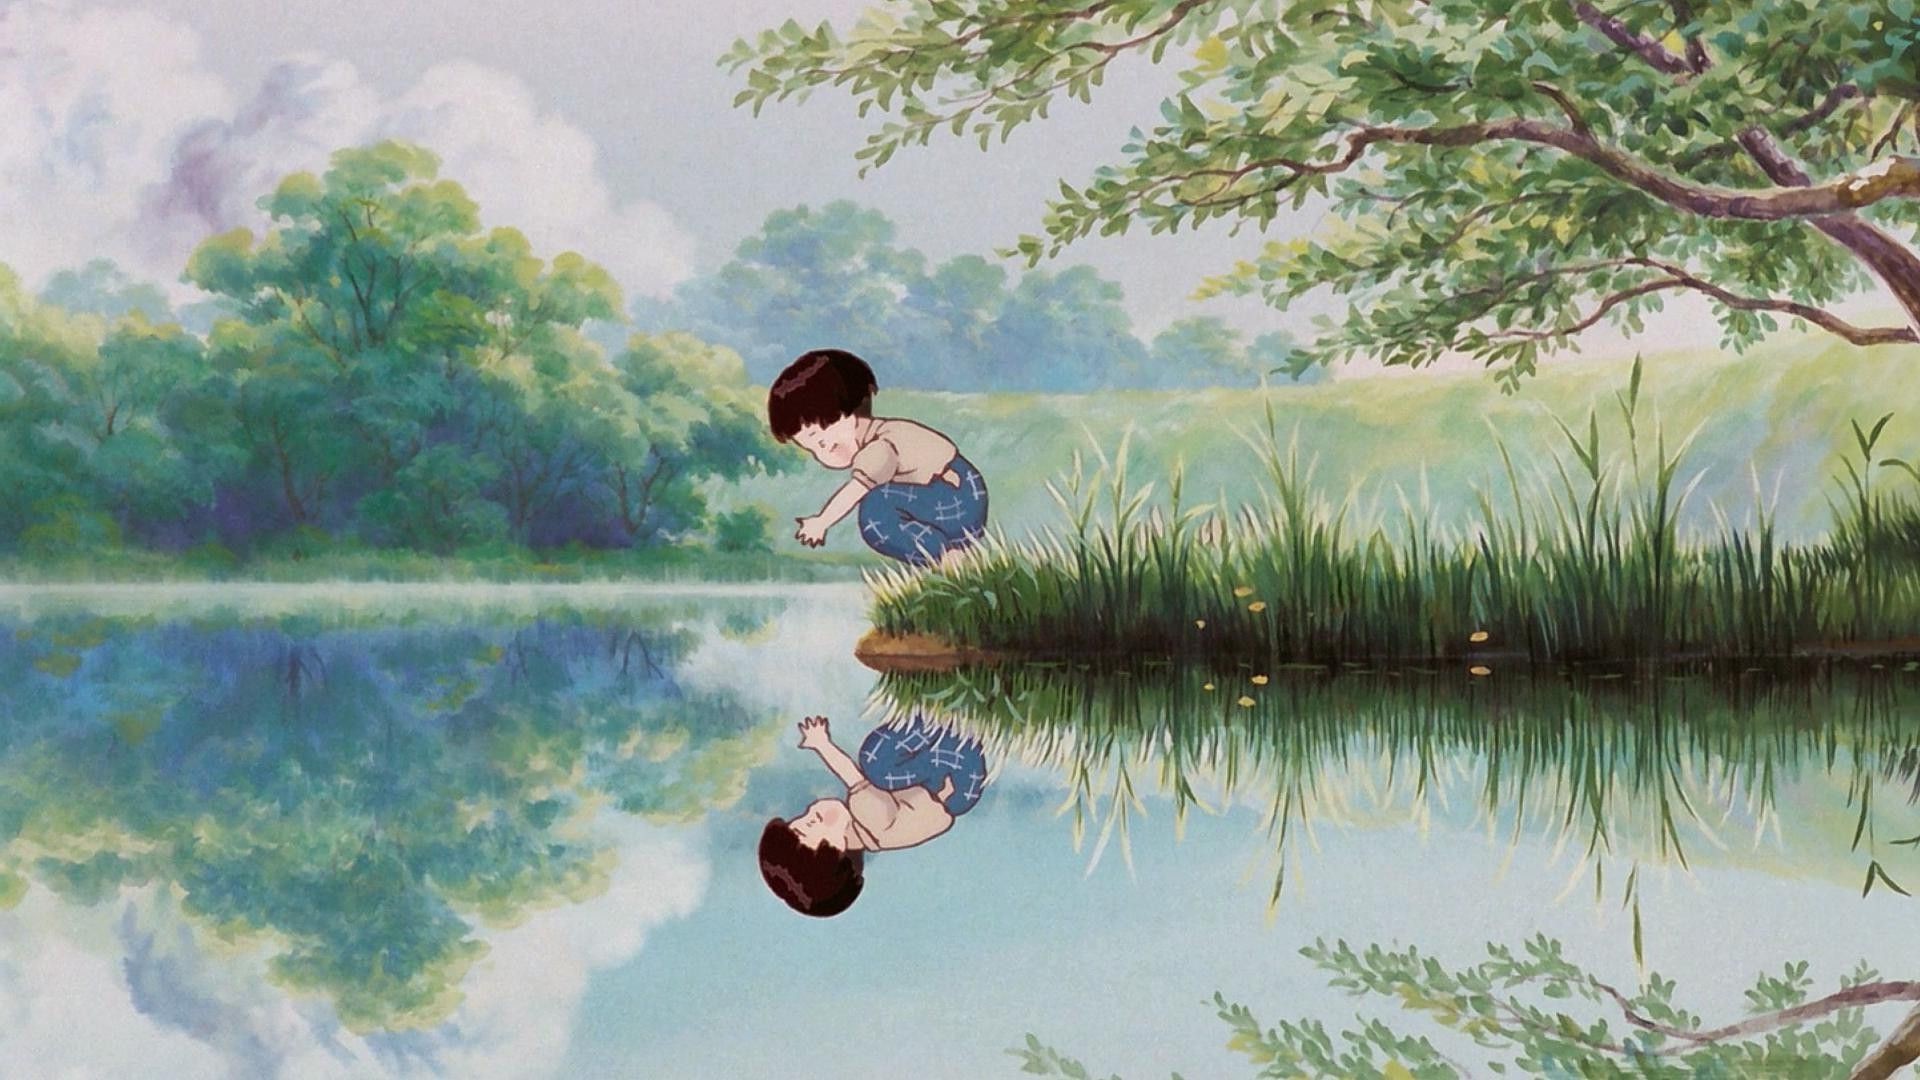 Studio Ghibli Wallpaper (74+ pictures)